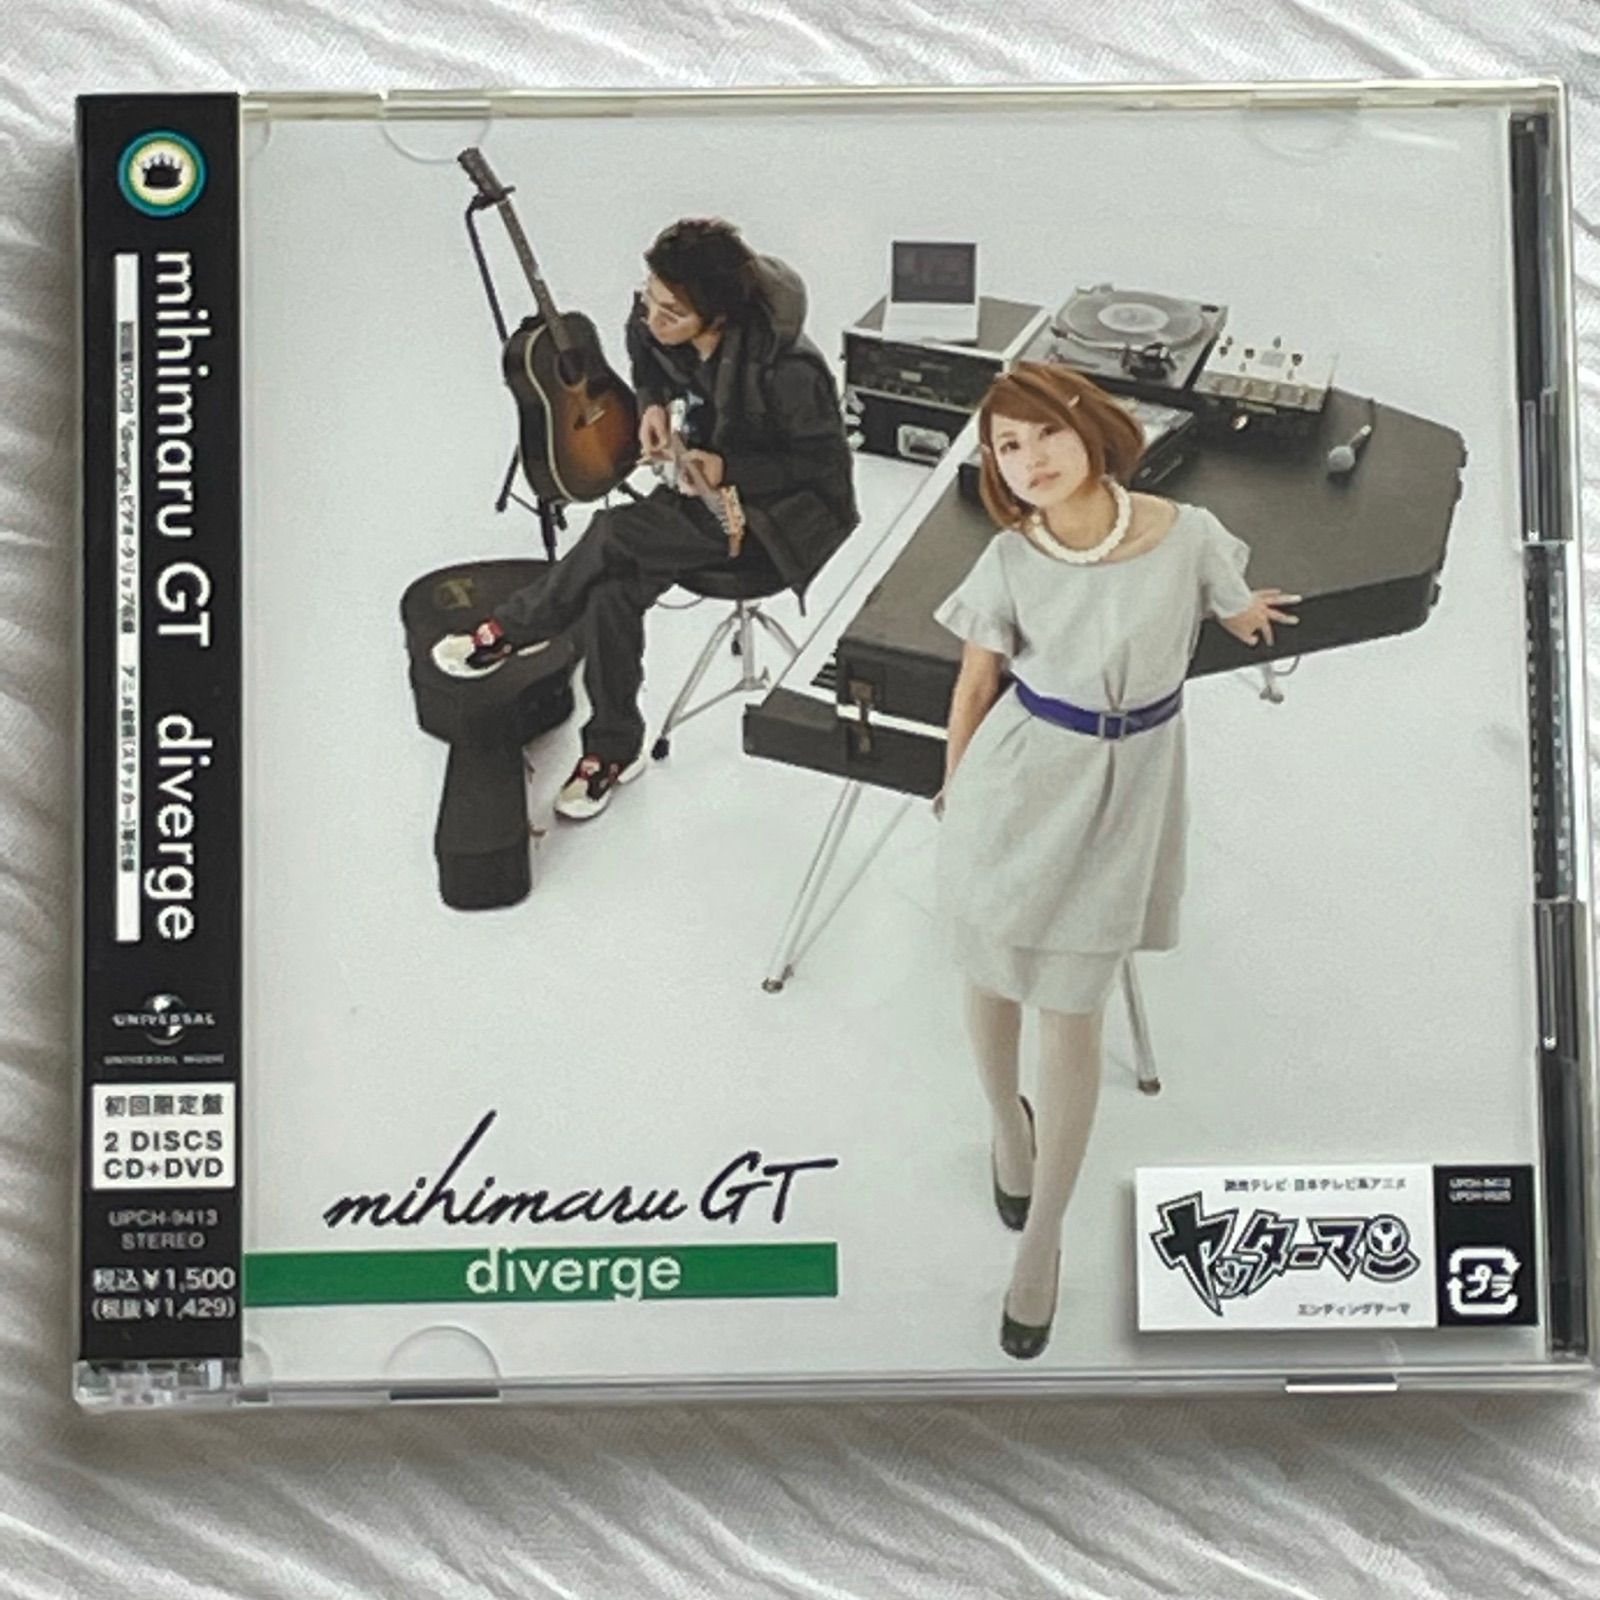 mihimaru GT｜diverge（初回限定盤）｜未開封・未使用CD＋DVD｜ミヒマル GT